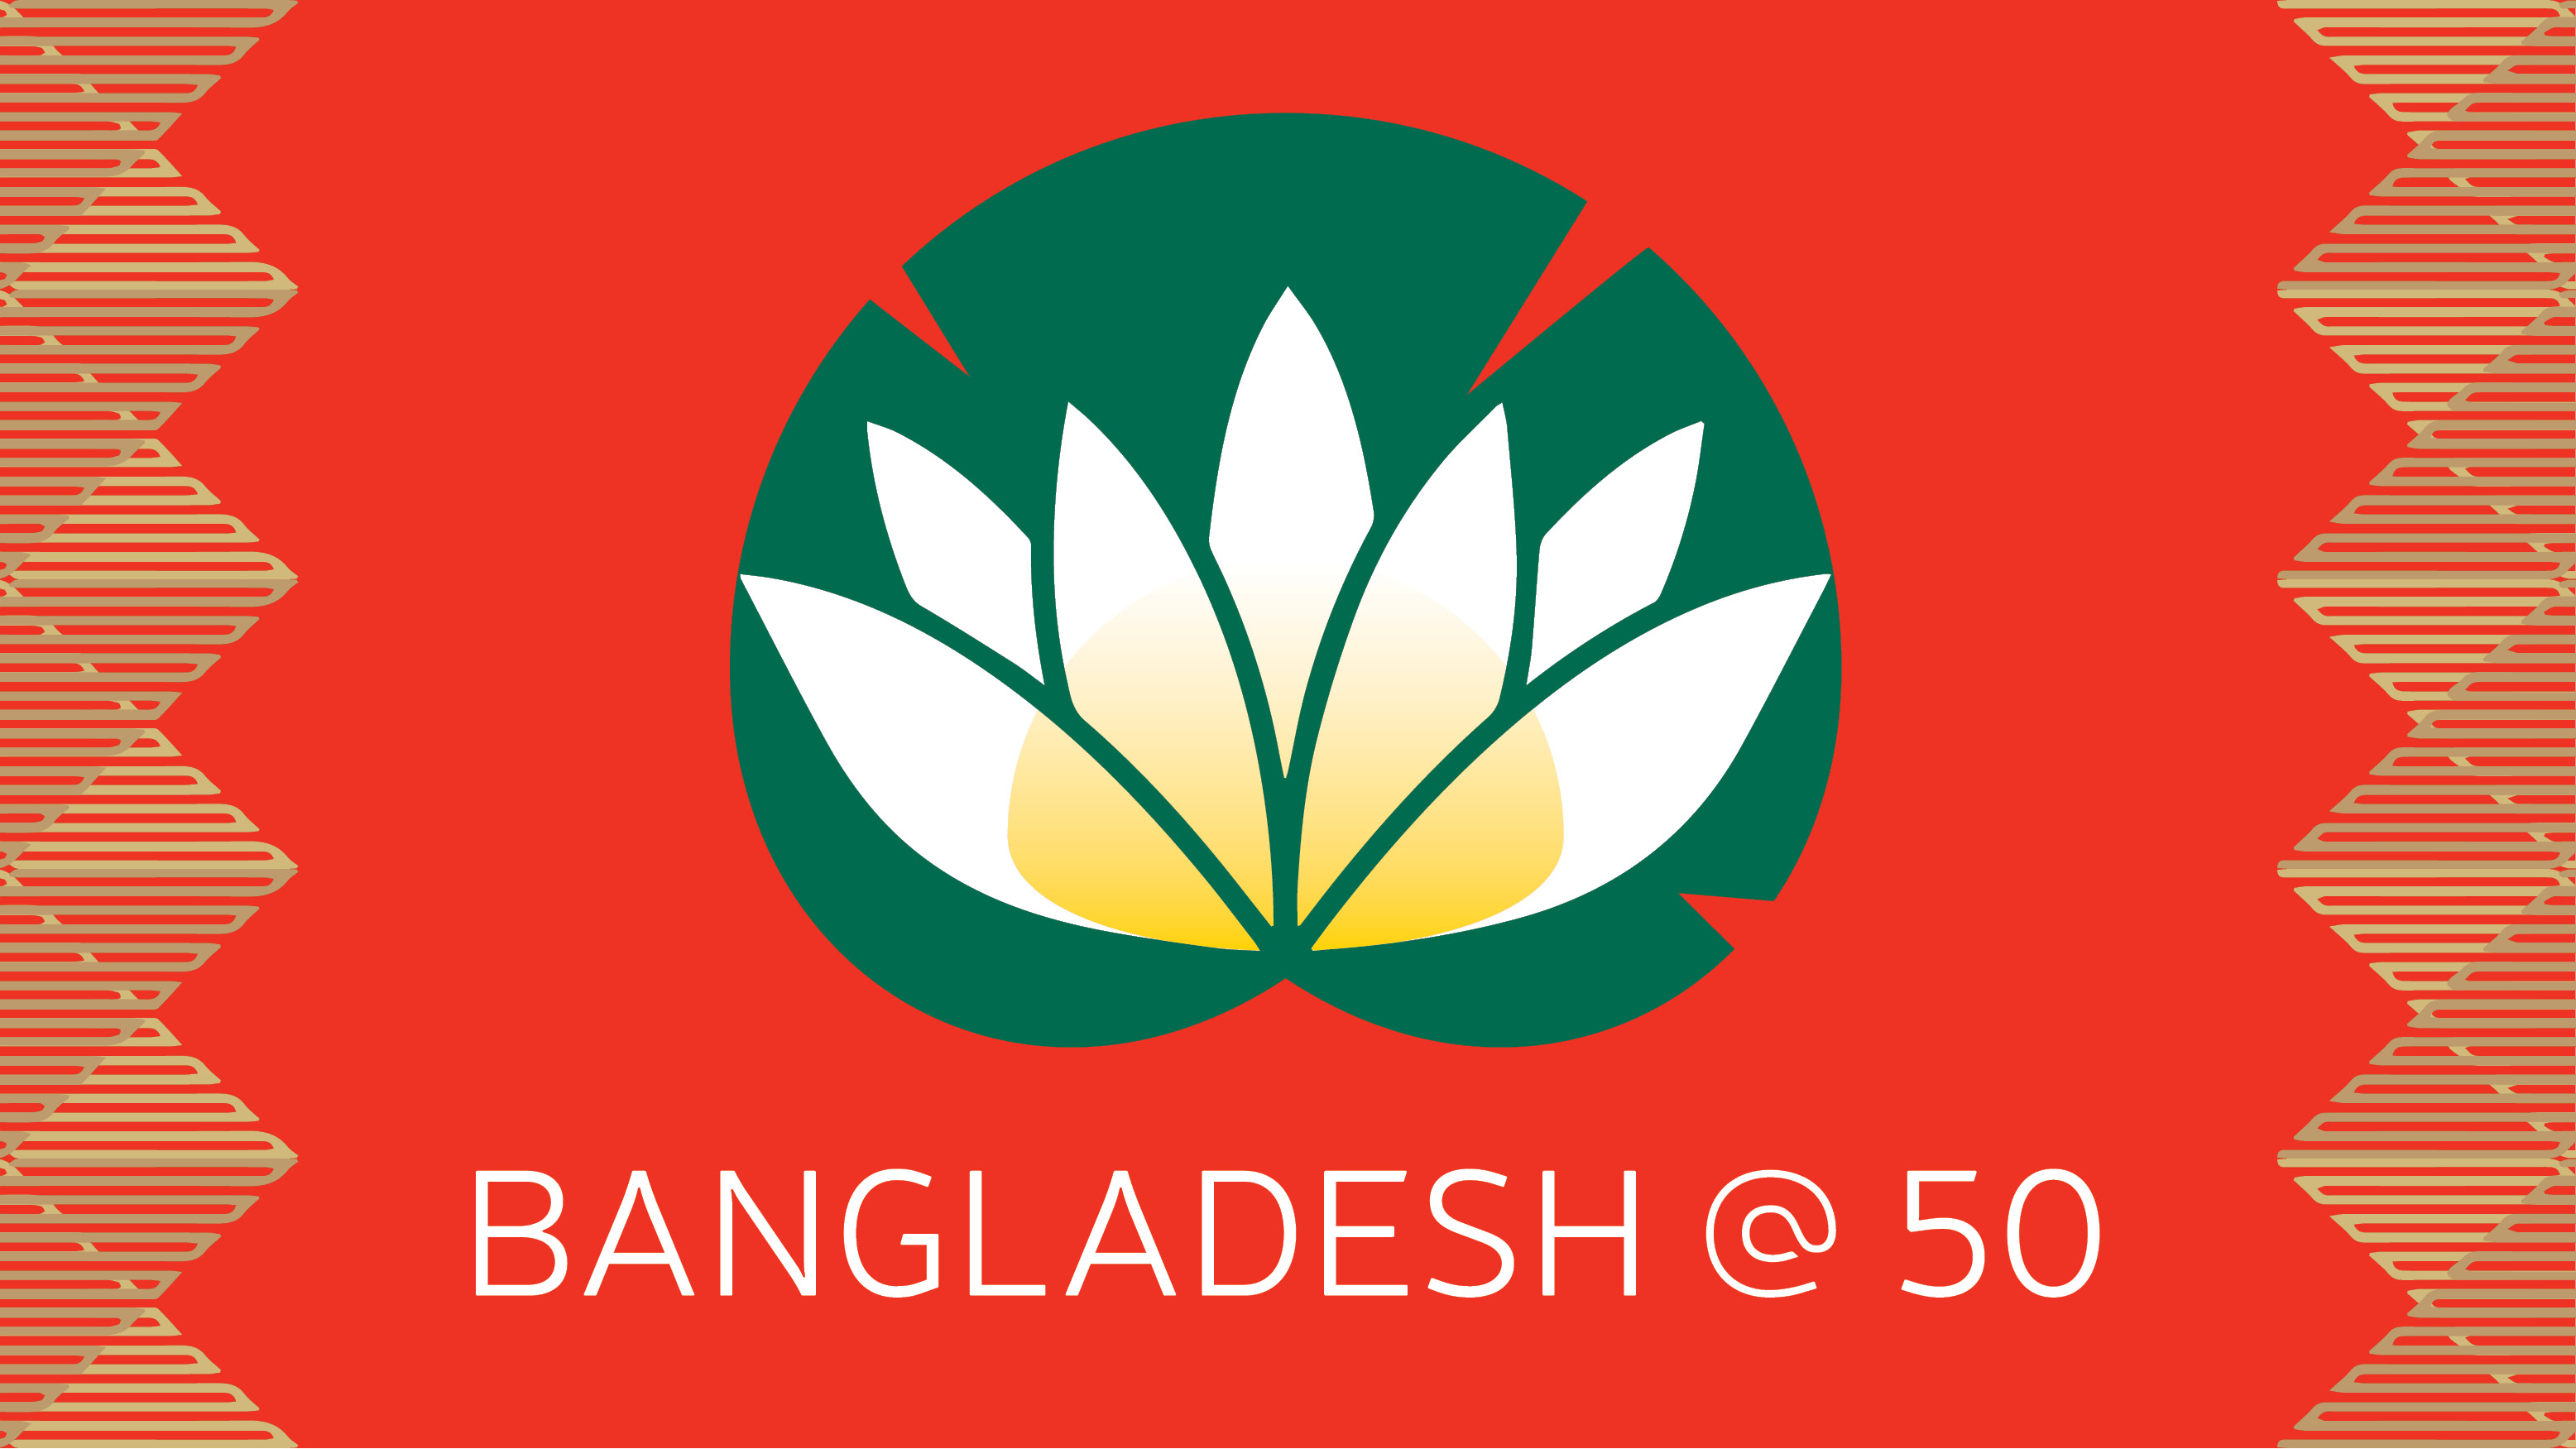 Bangladesh_747x420_red background